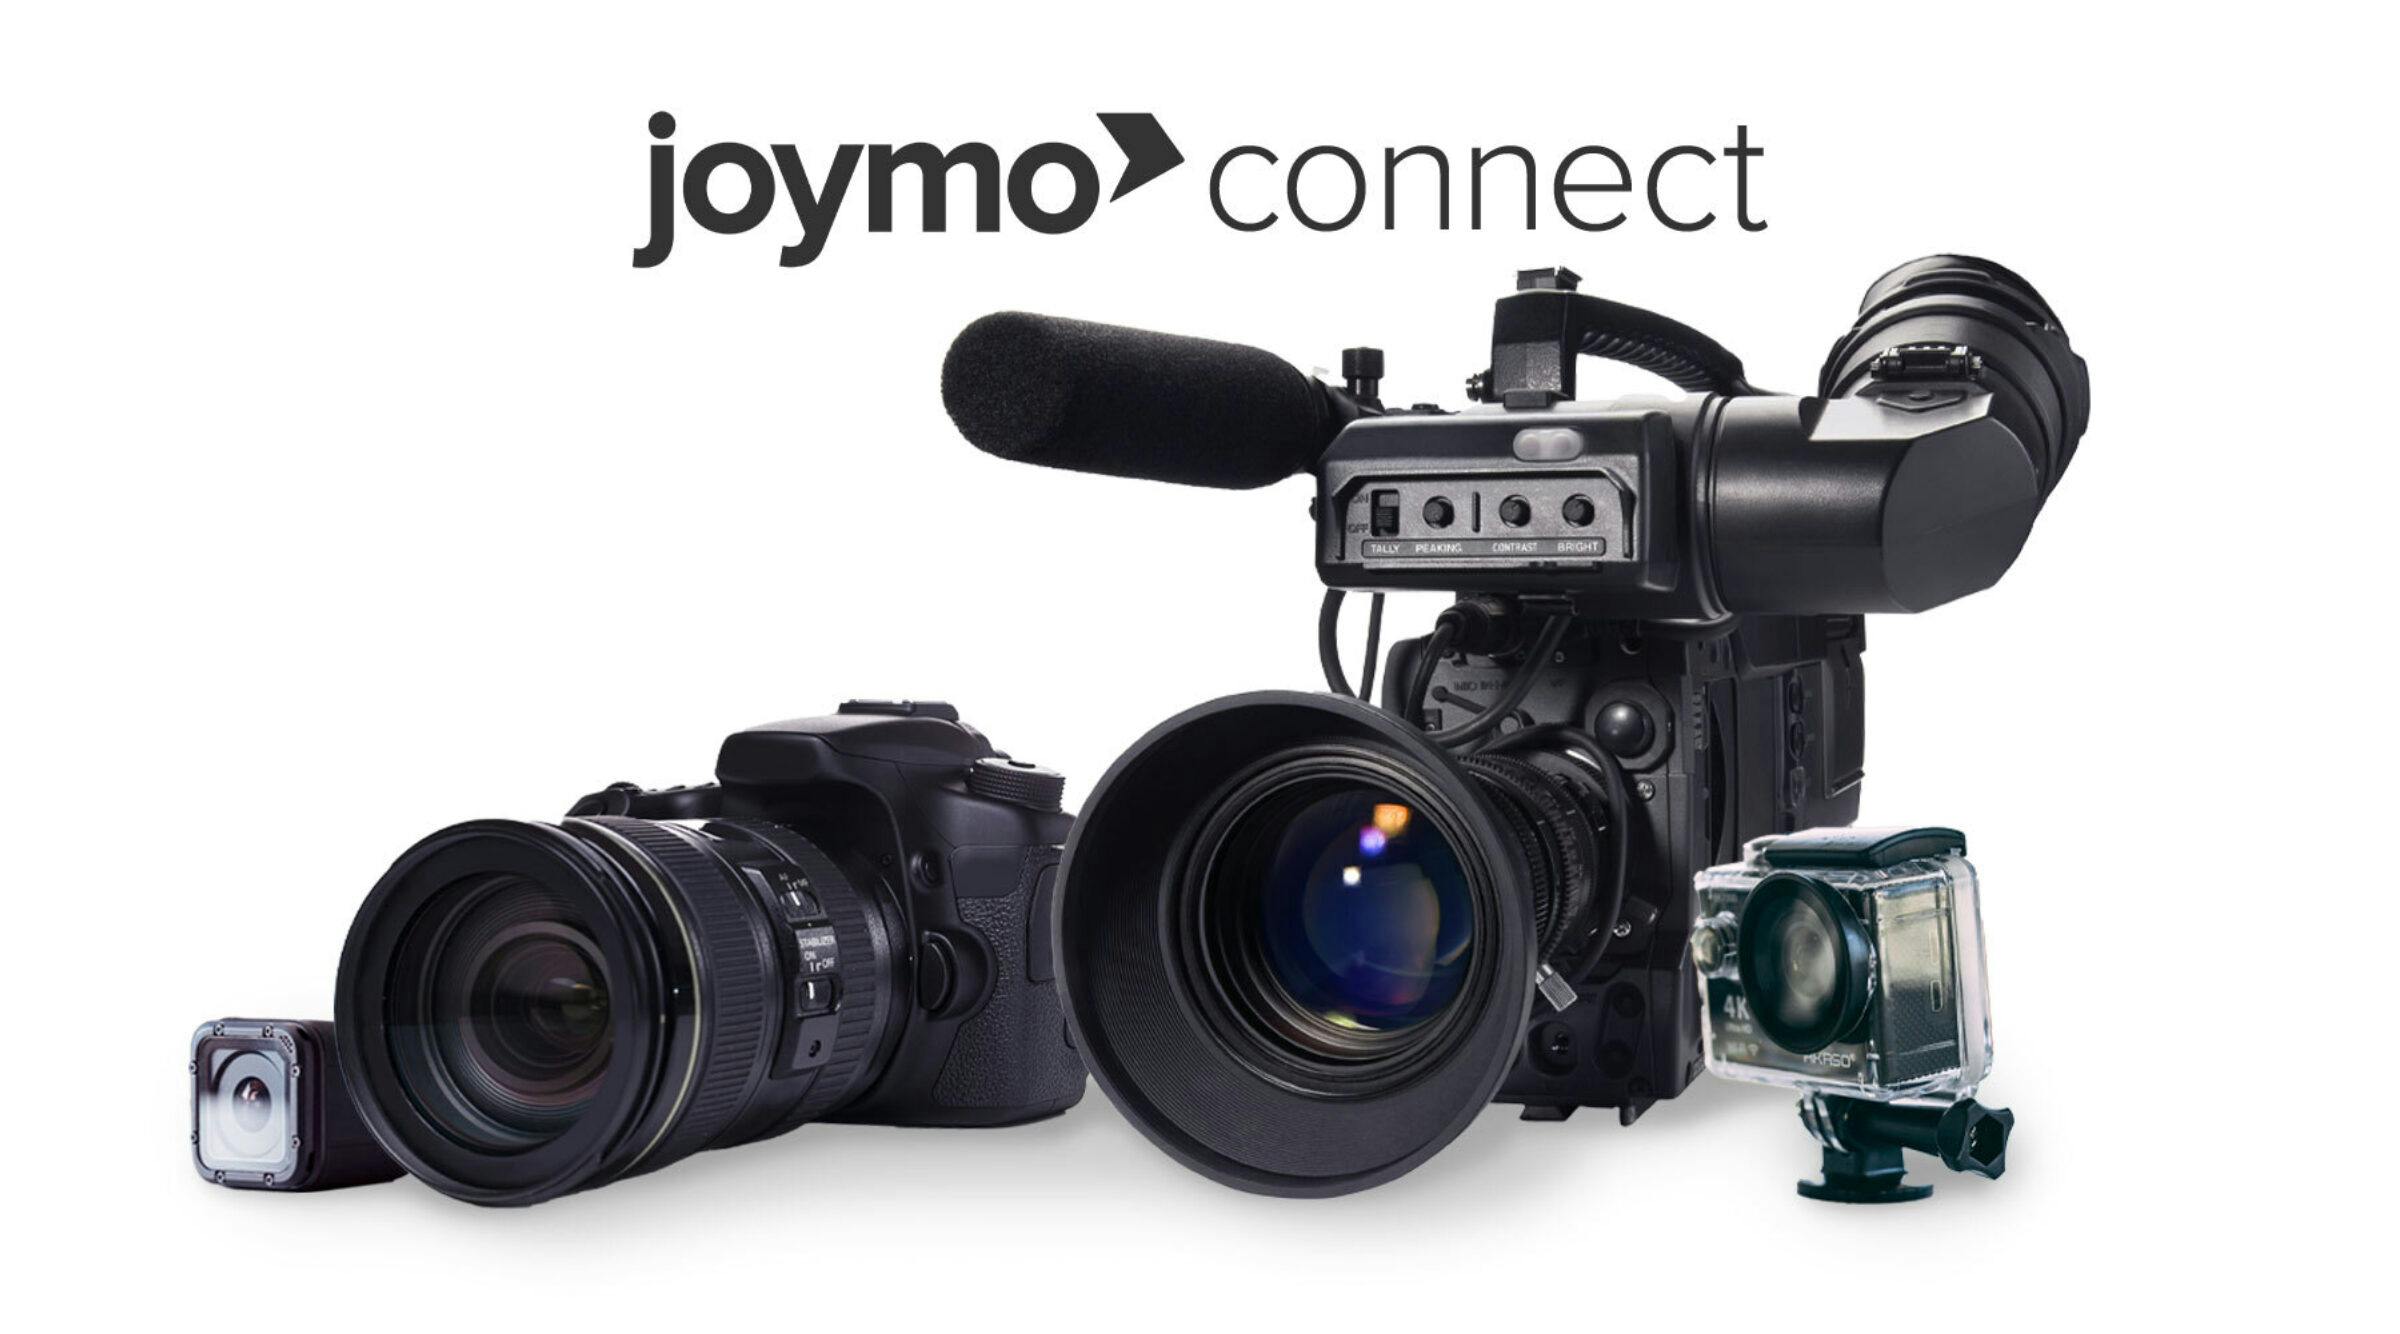 Joymo connect devices 2